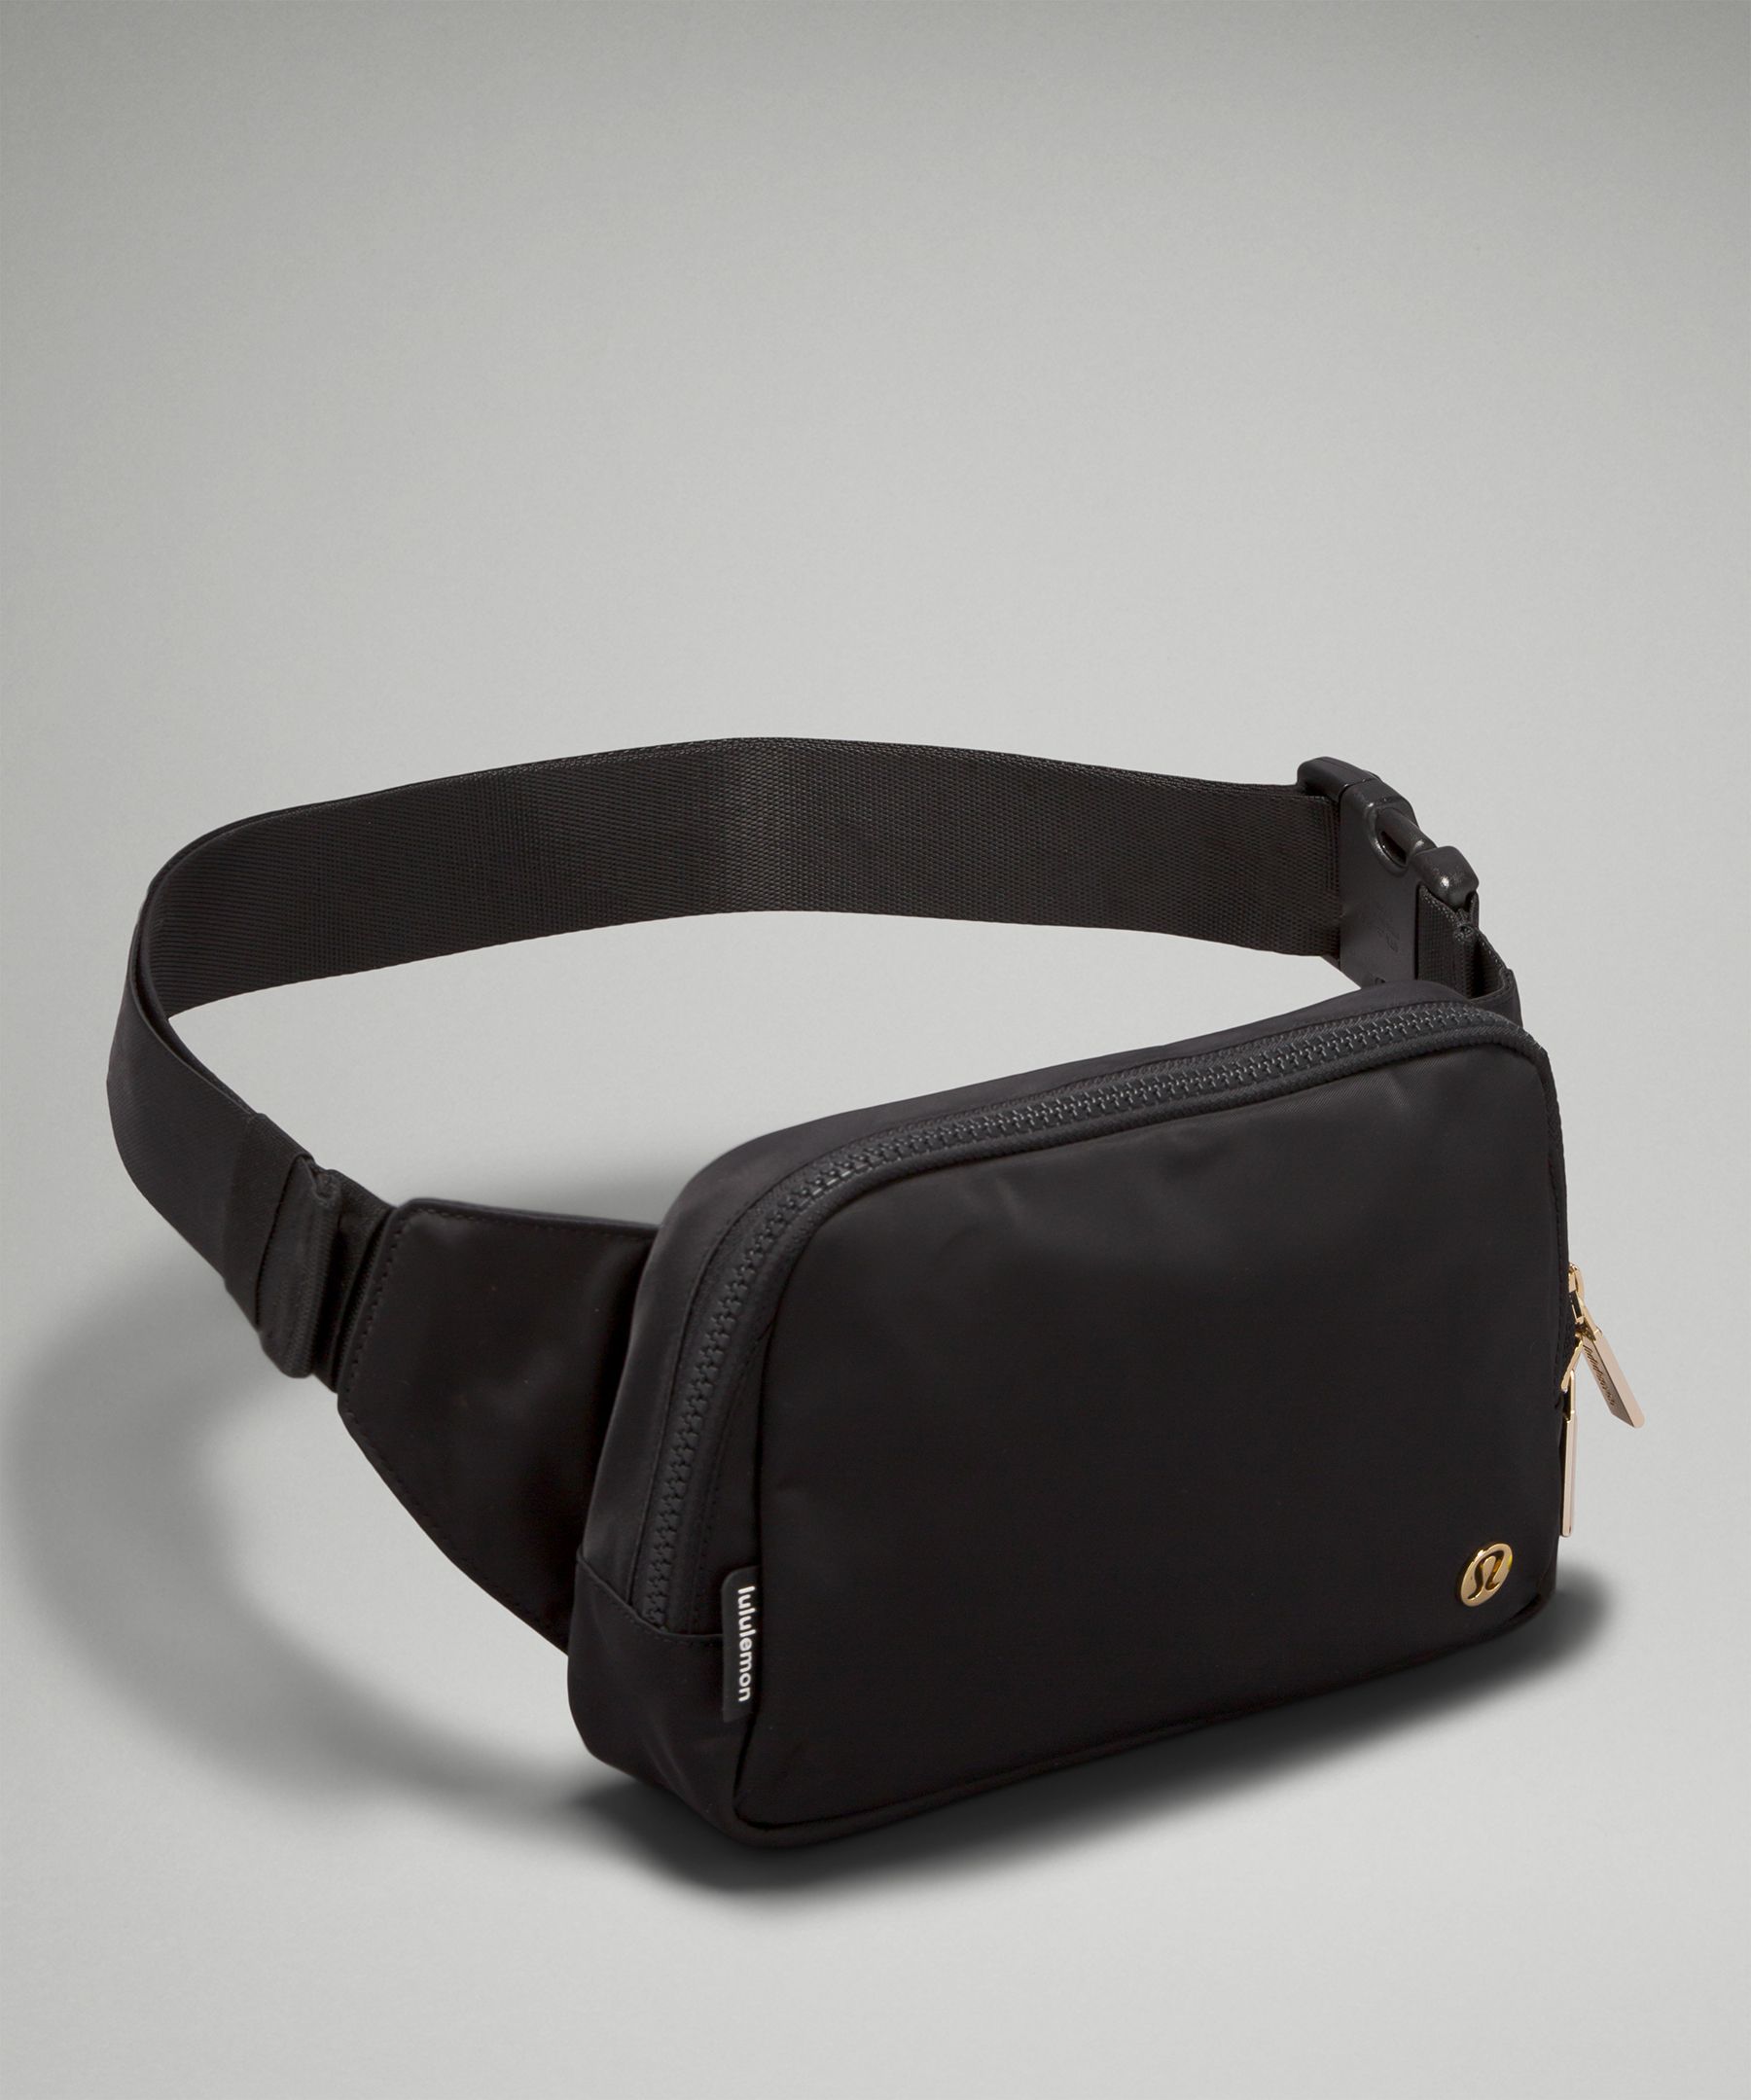 lululemon LPGA Everywhere Belt Bag - Small in Black